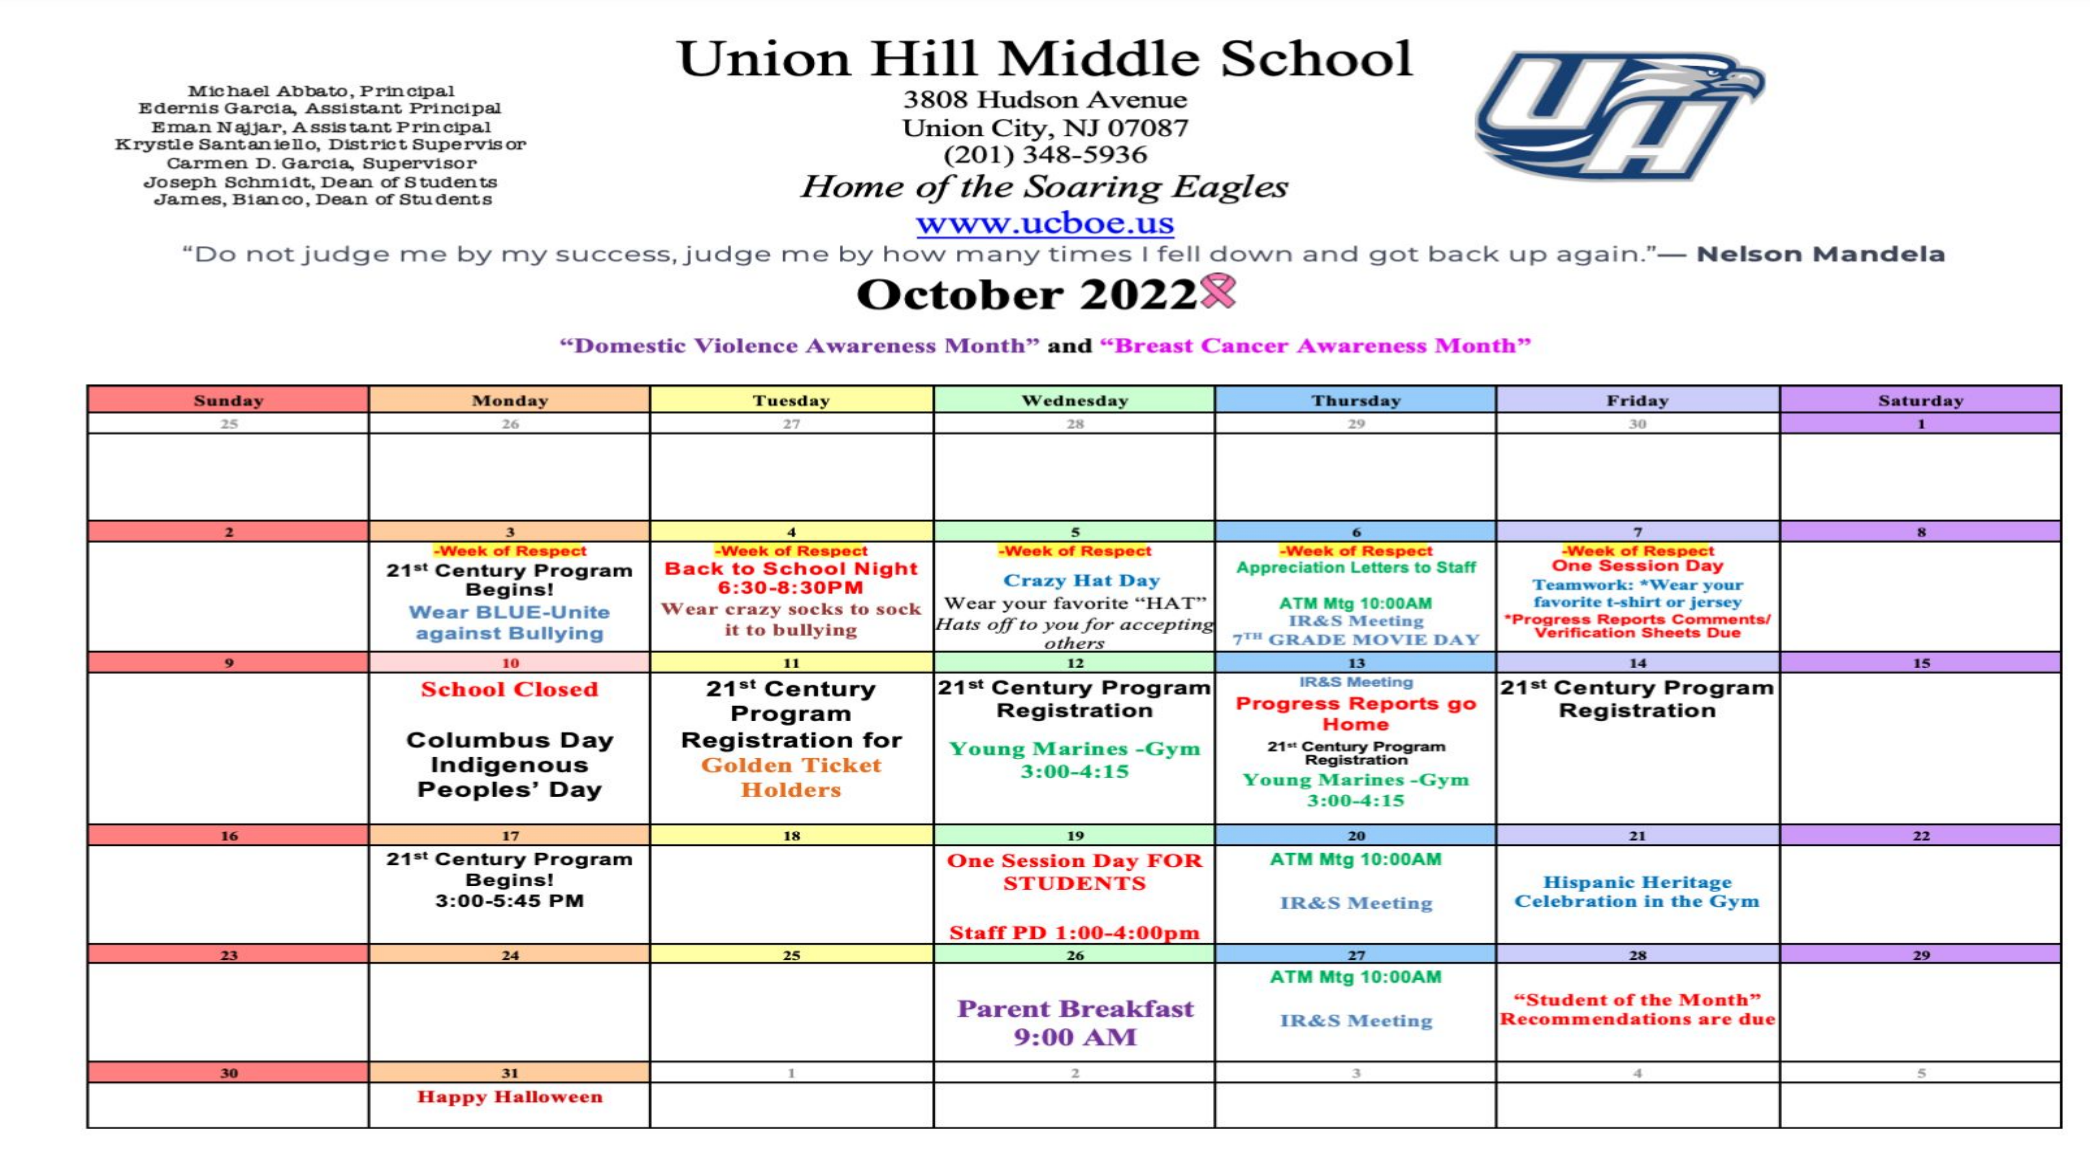 Union Hill Middle School-October 2022 Calendar